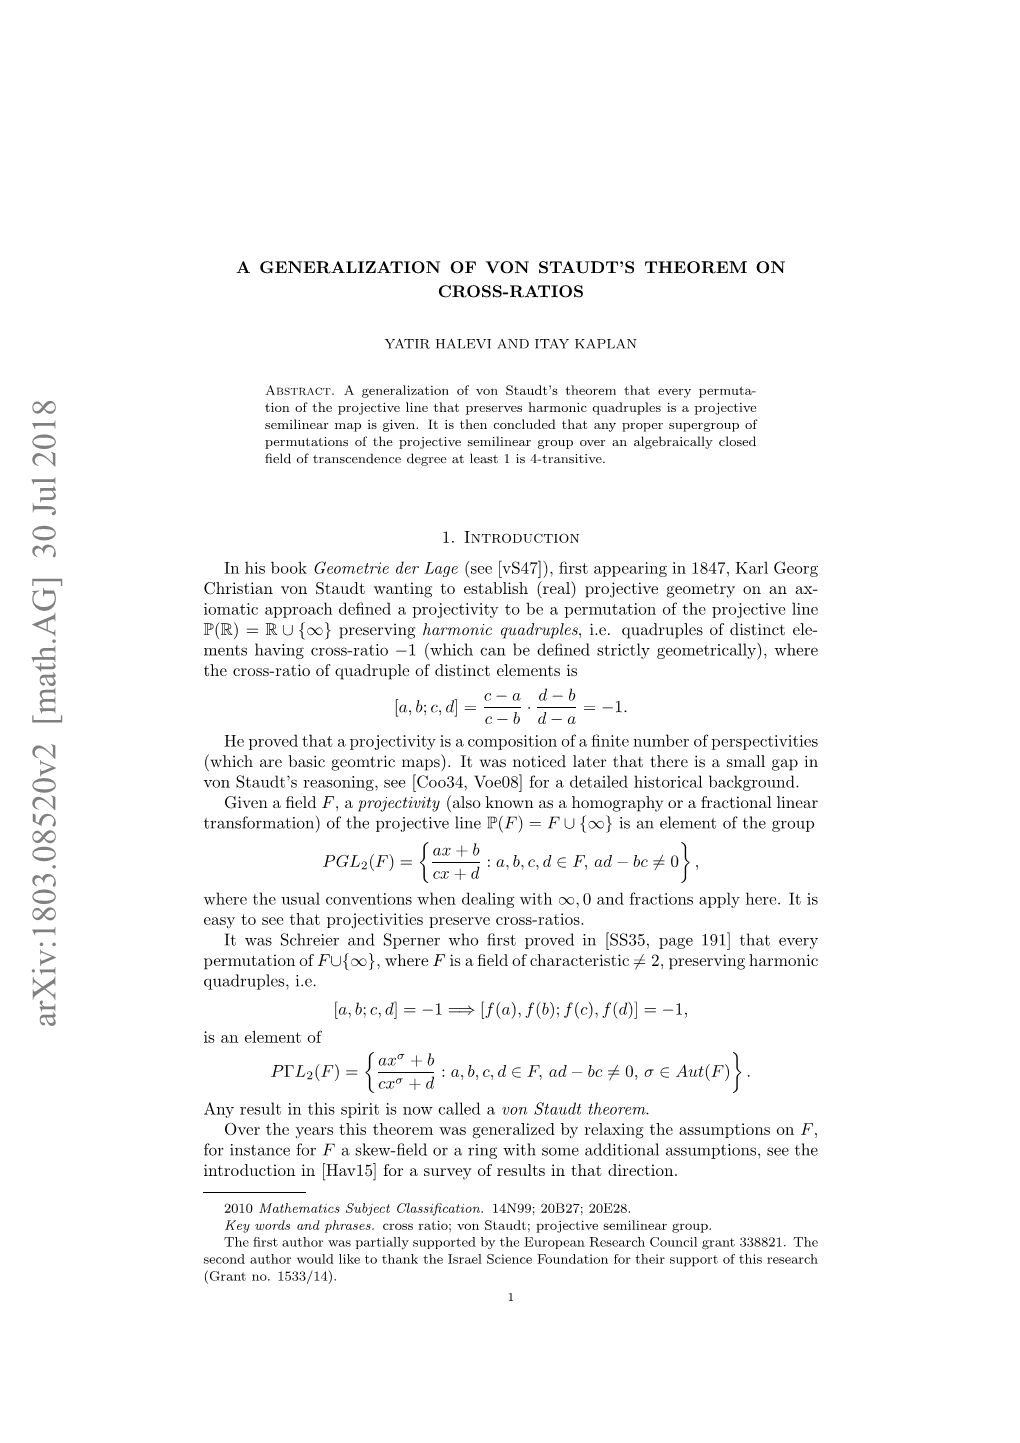 A Generalization of Von Staudt's Theorem on Cross-Ratios